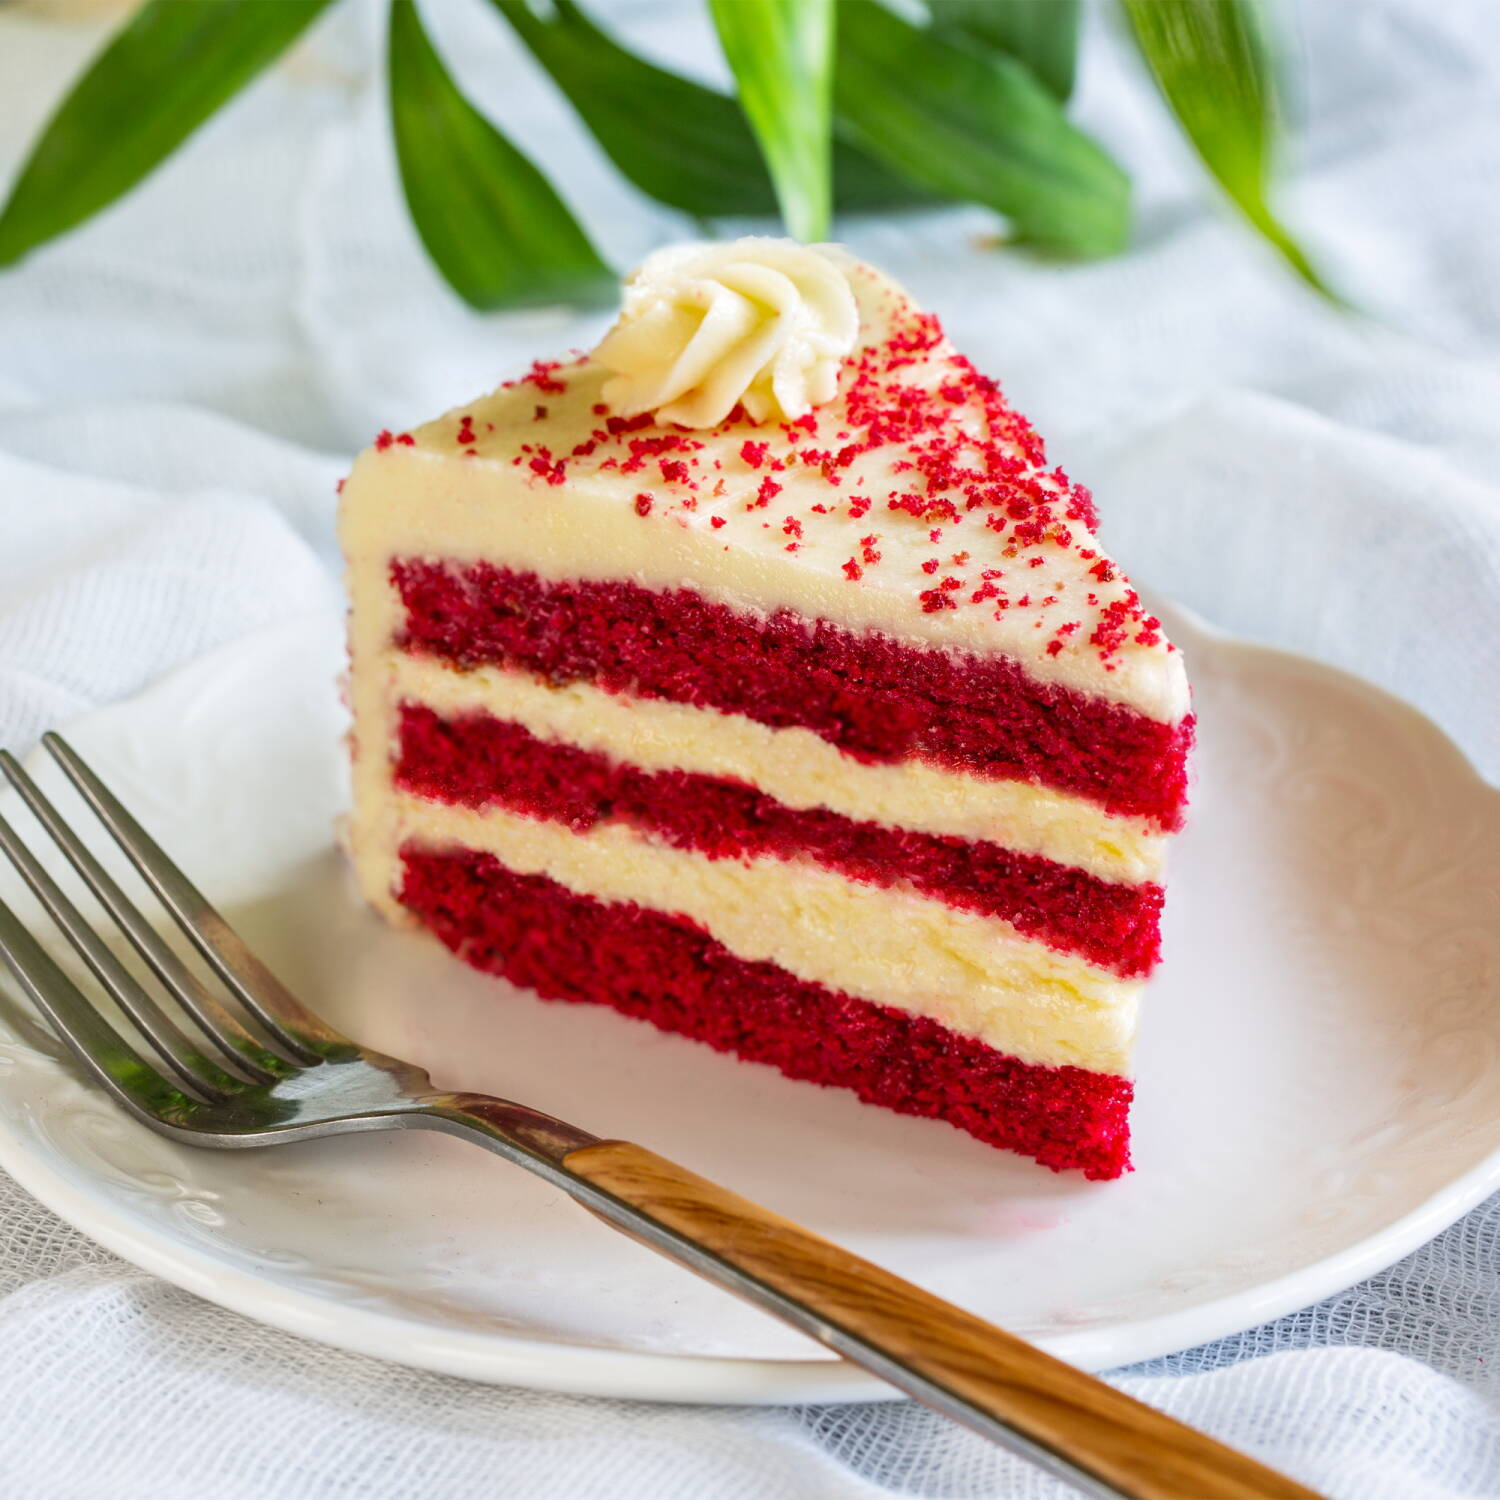 lil buttercream bows • • • • #birthday #birthdaycake #cake #pastry #dessert  #instacake #buttercream #pastrychef #bakery #baking... | Instagram